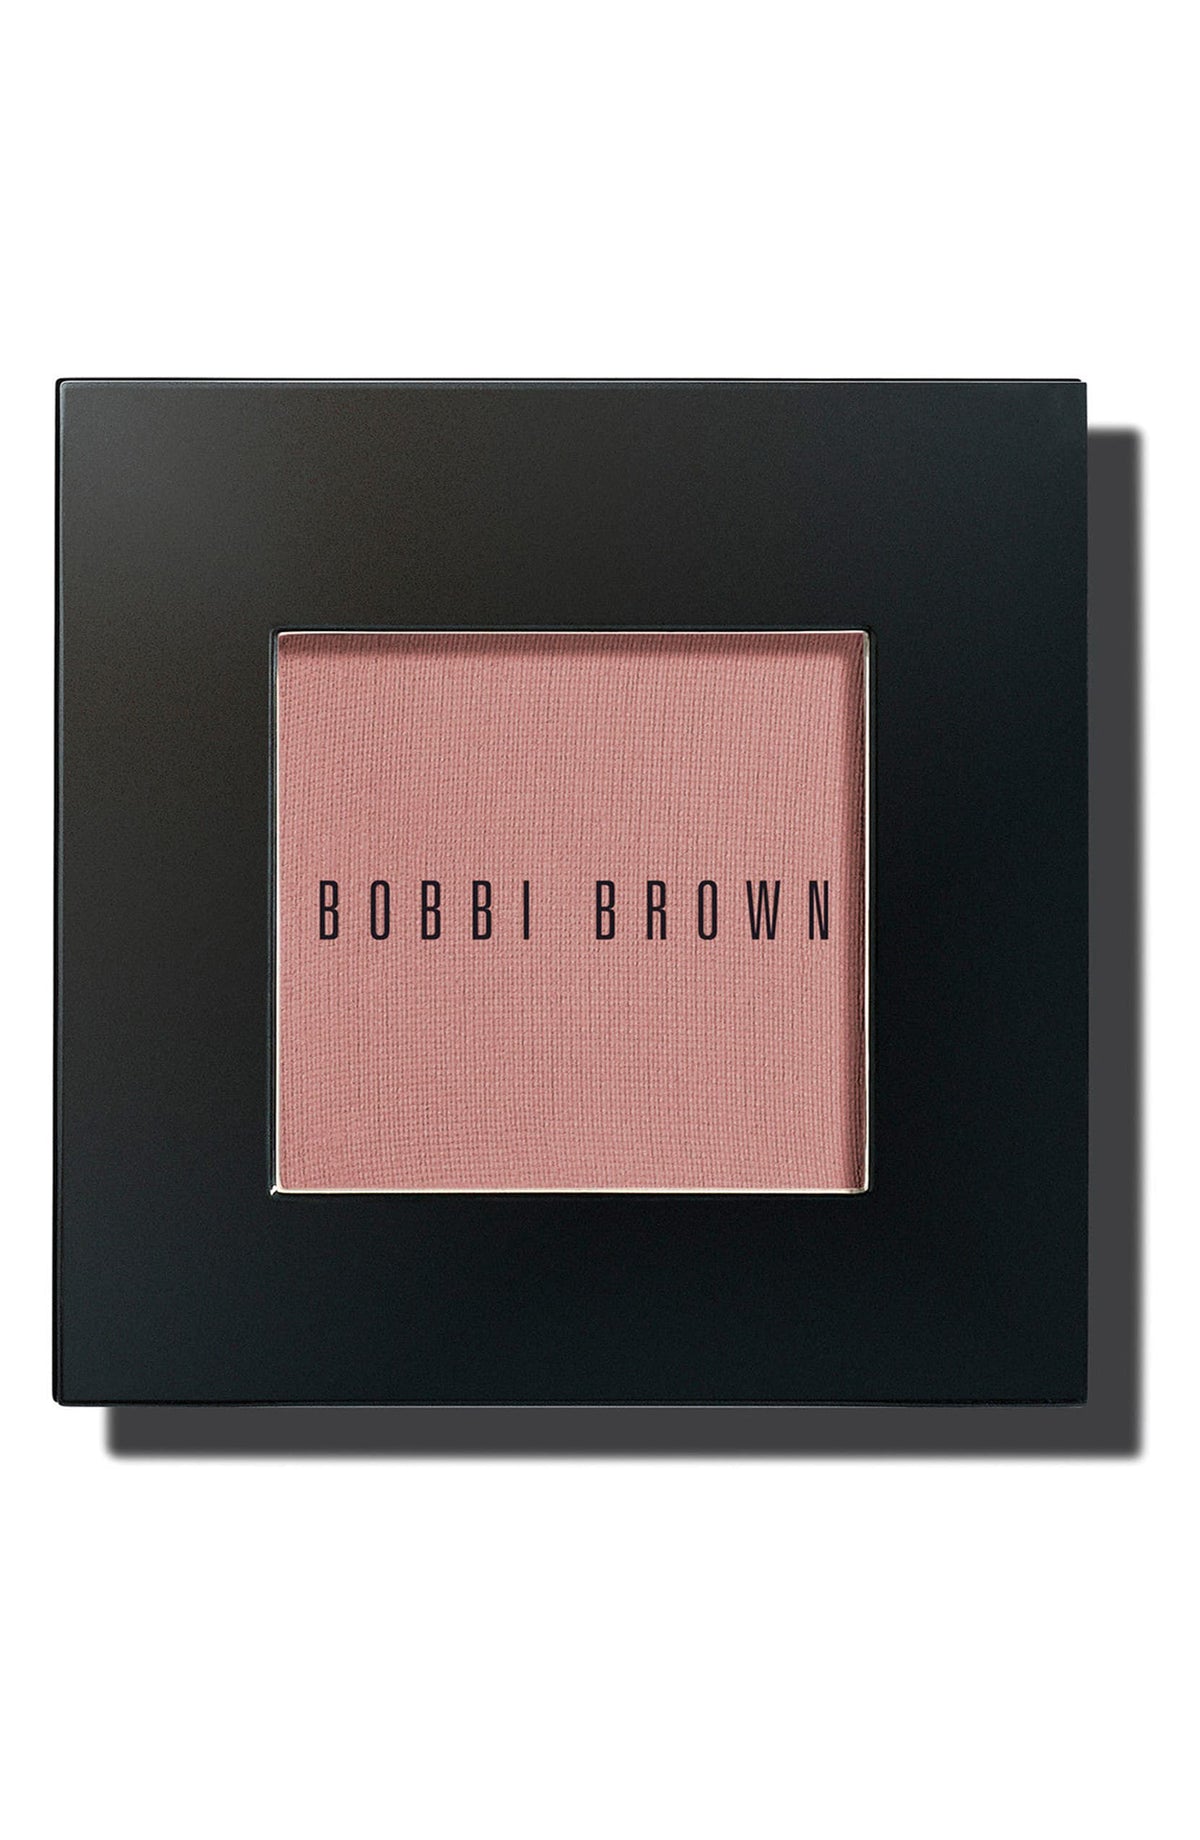 Bobbi Brown Eye Shadow - eCosmeticWorld